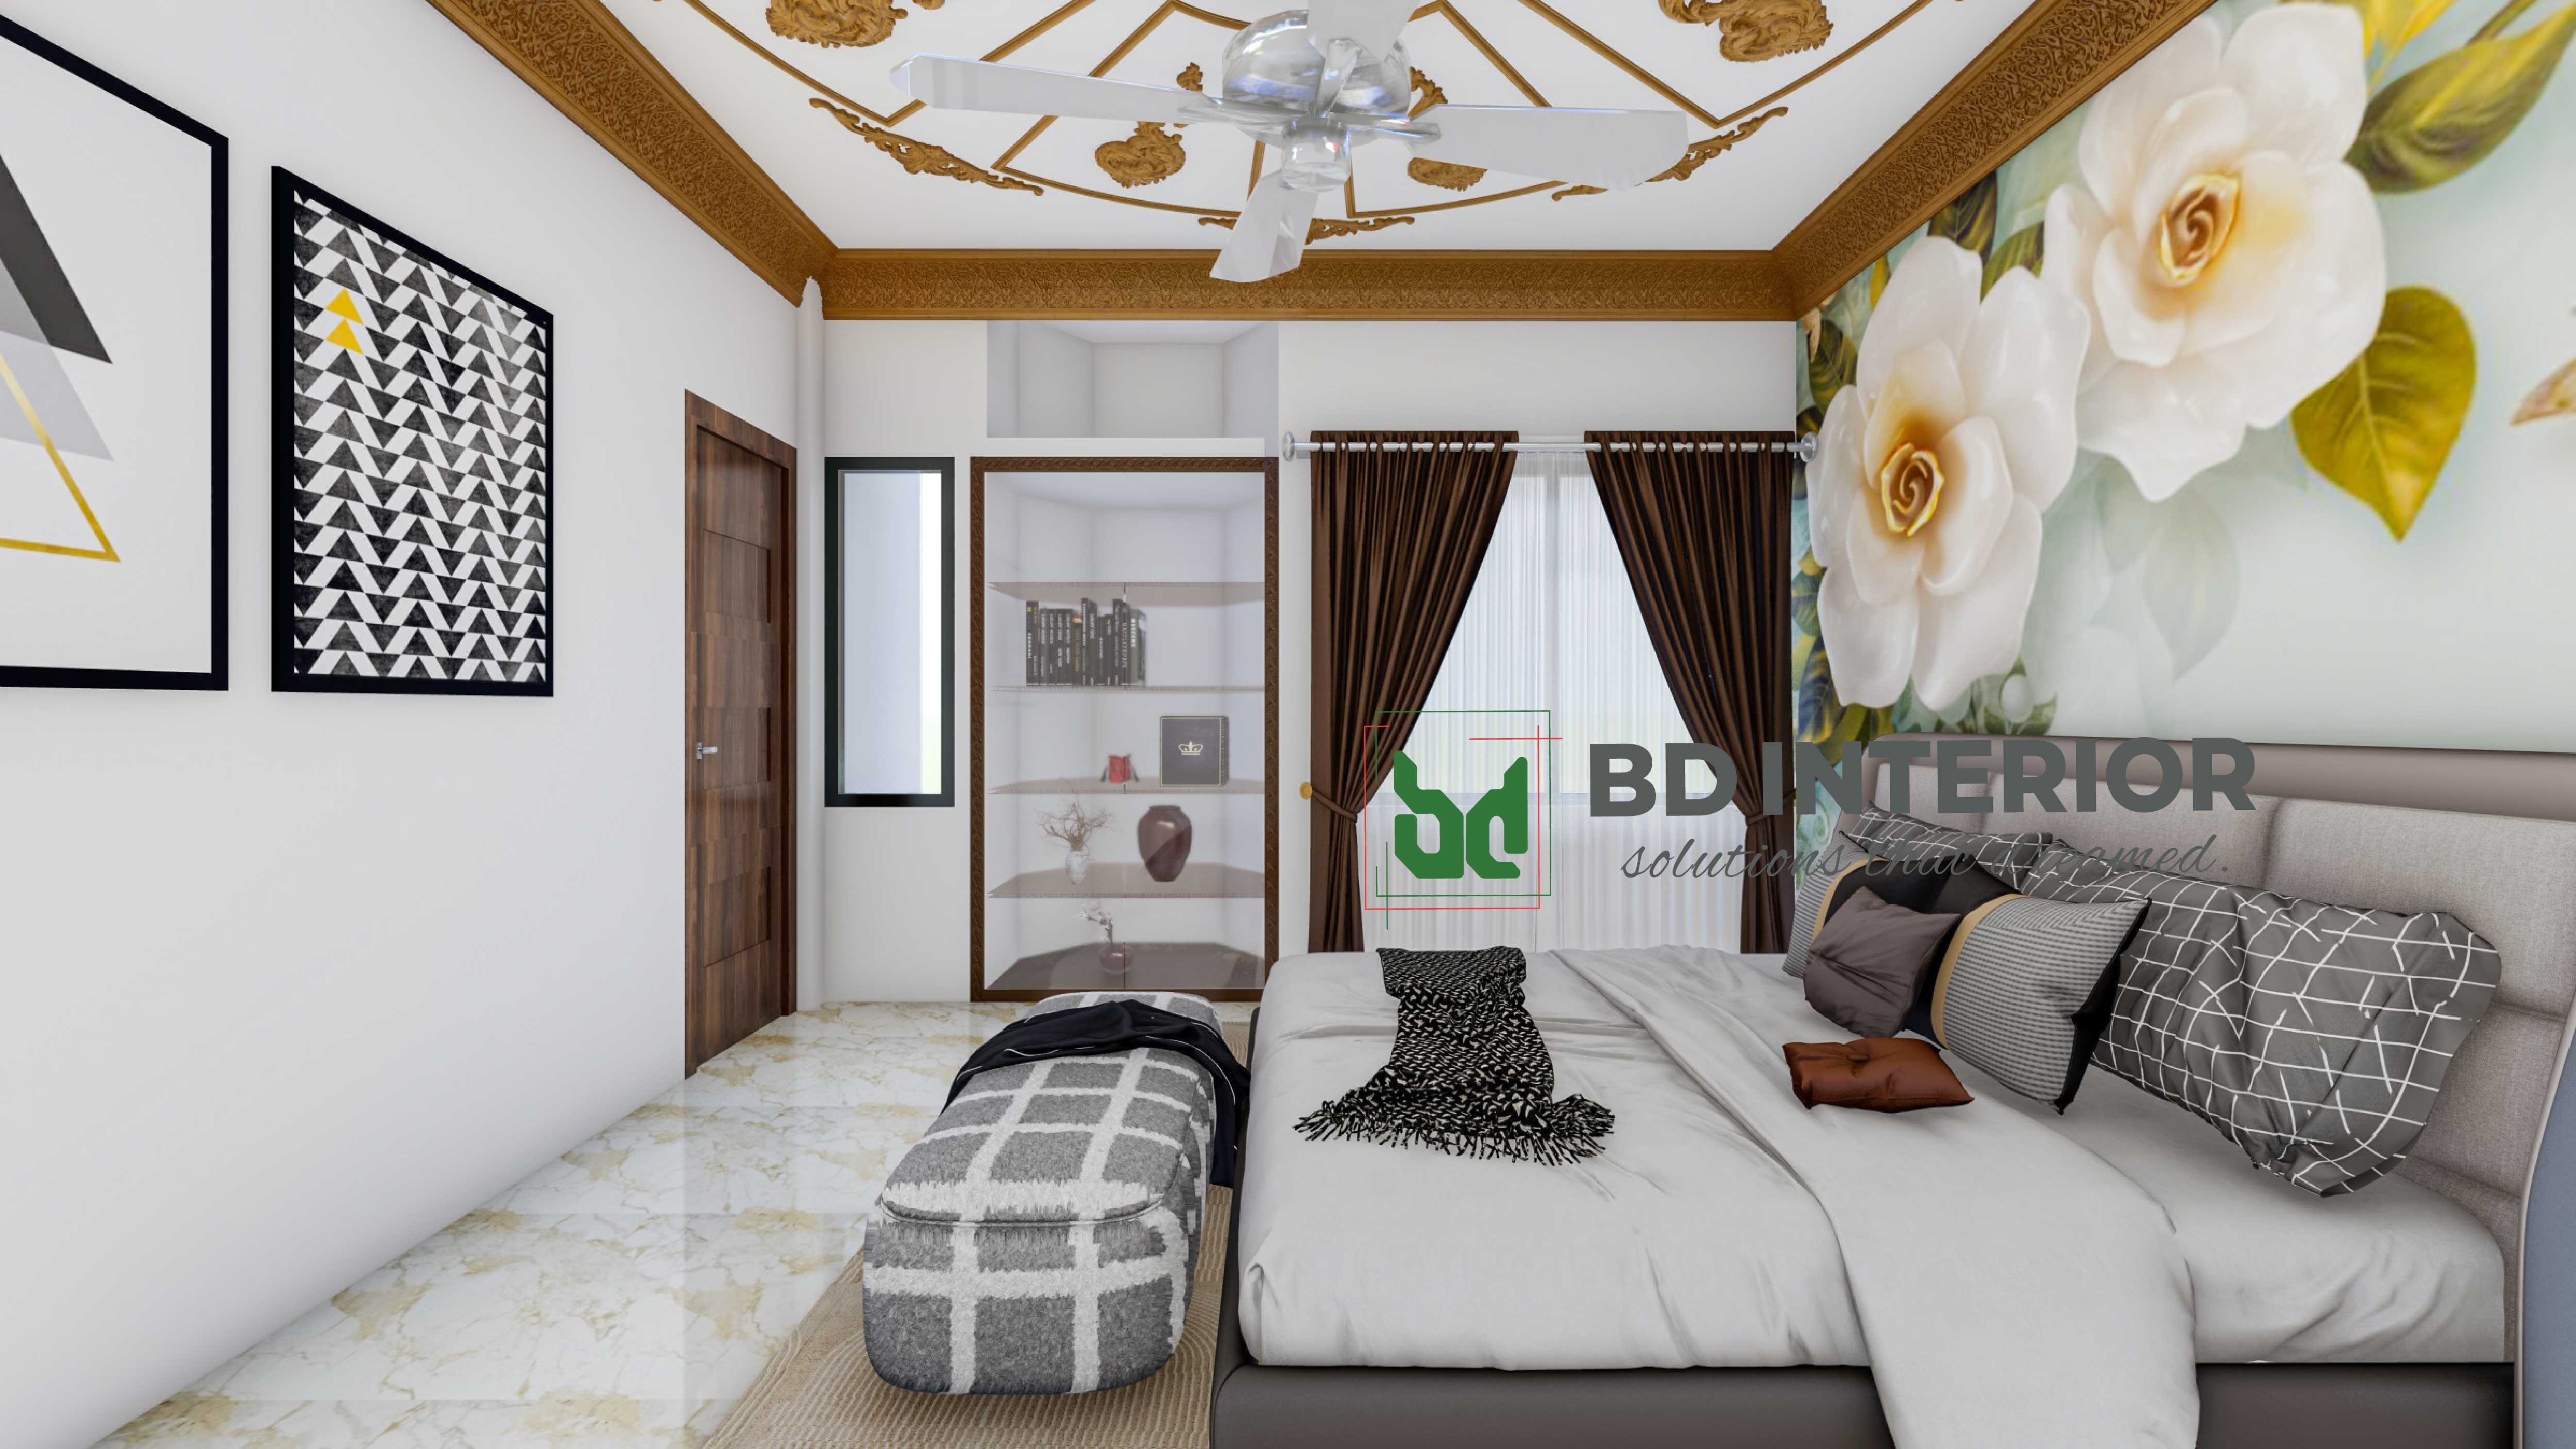 elegant master bedroom interior design